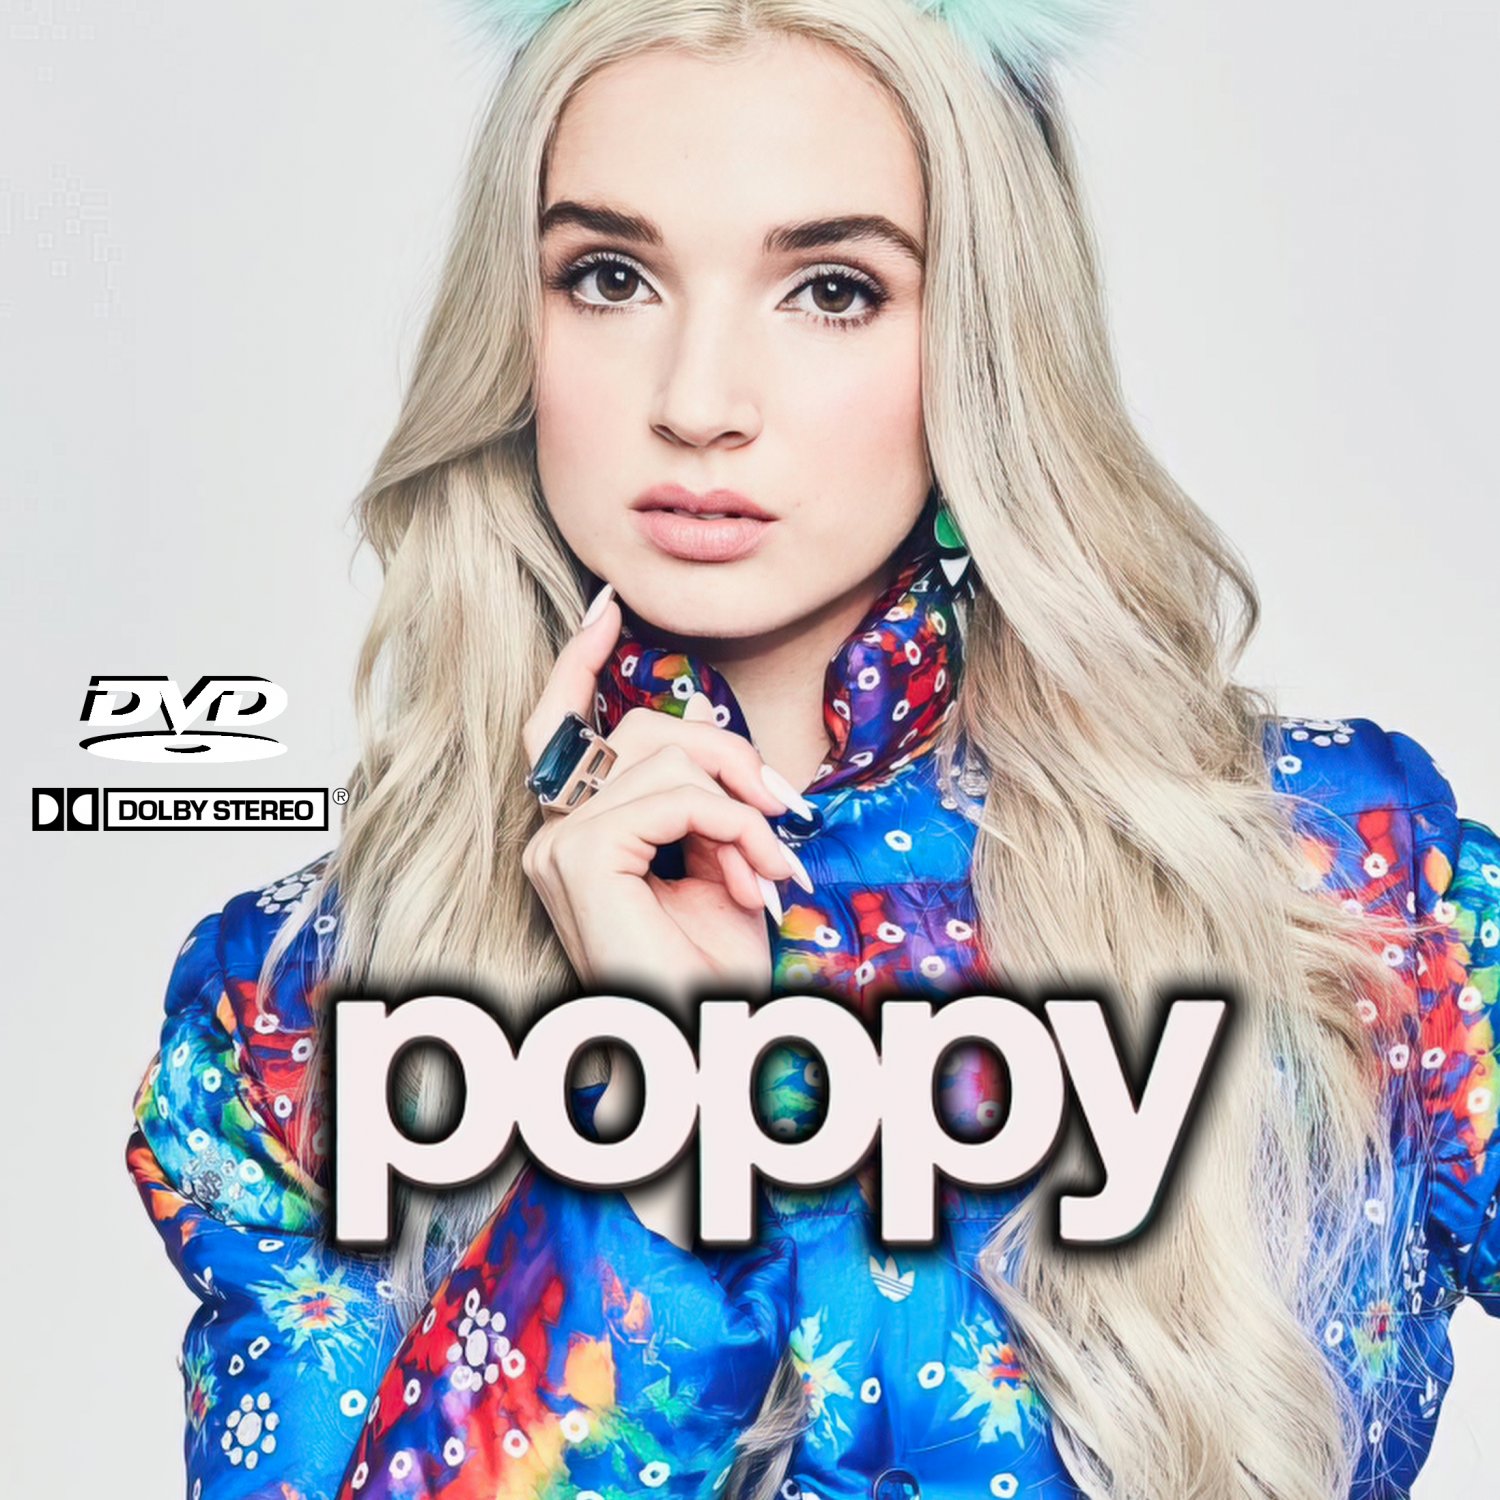 Poppy Music Videos Collection (1 DVD) 22 Music Videos